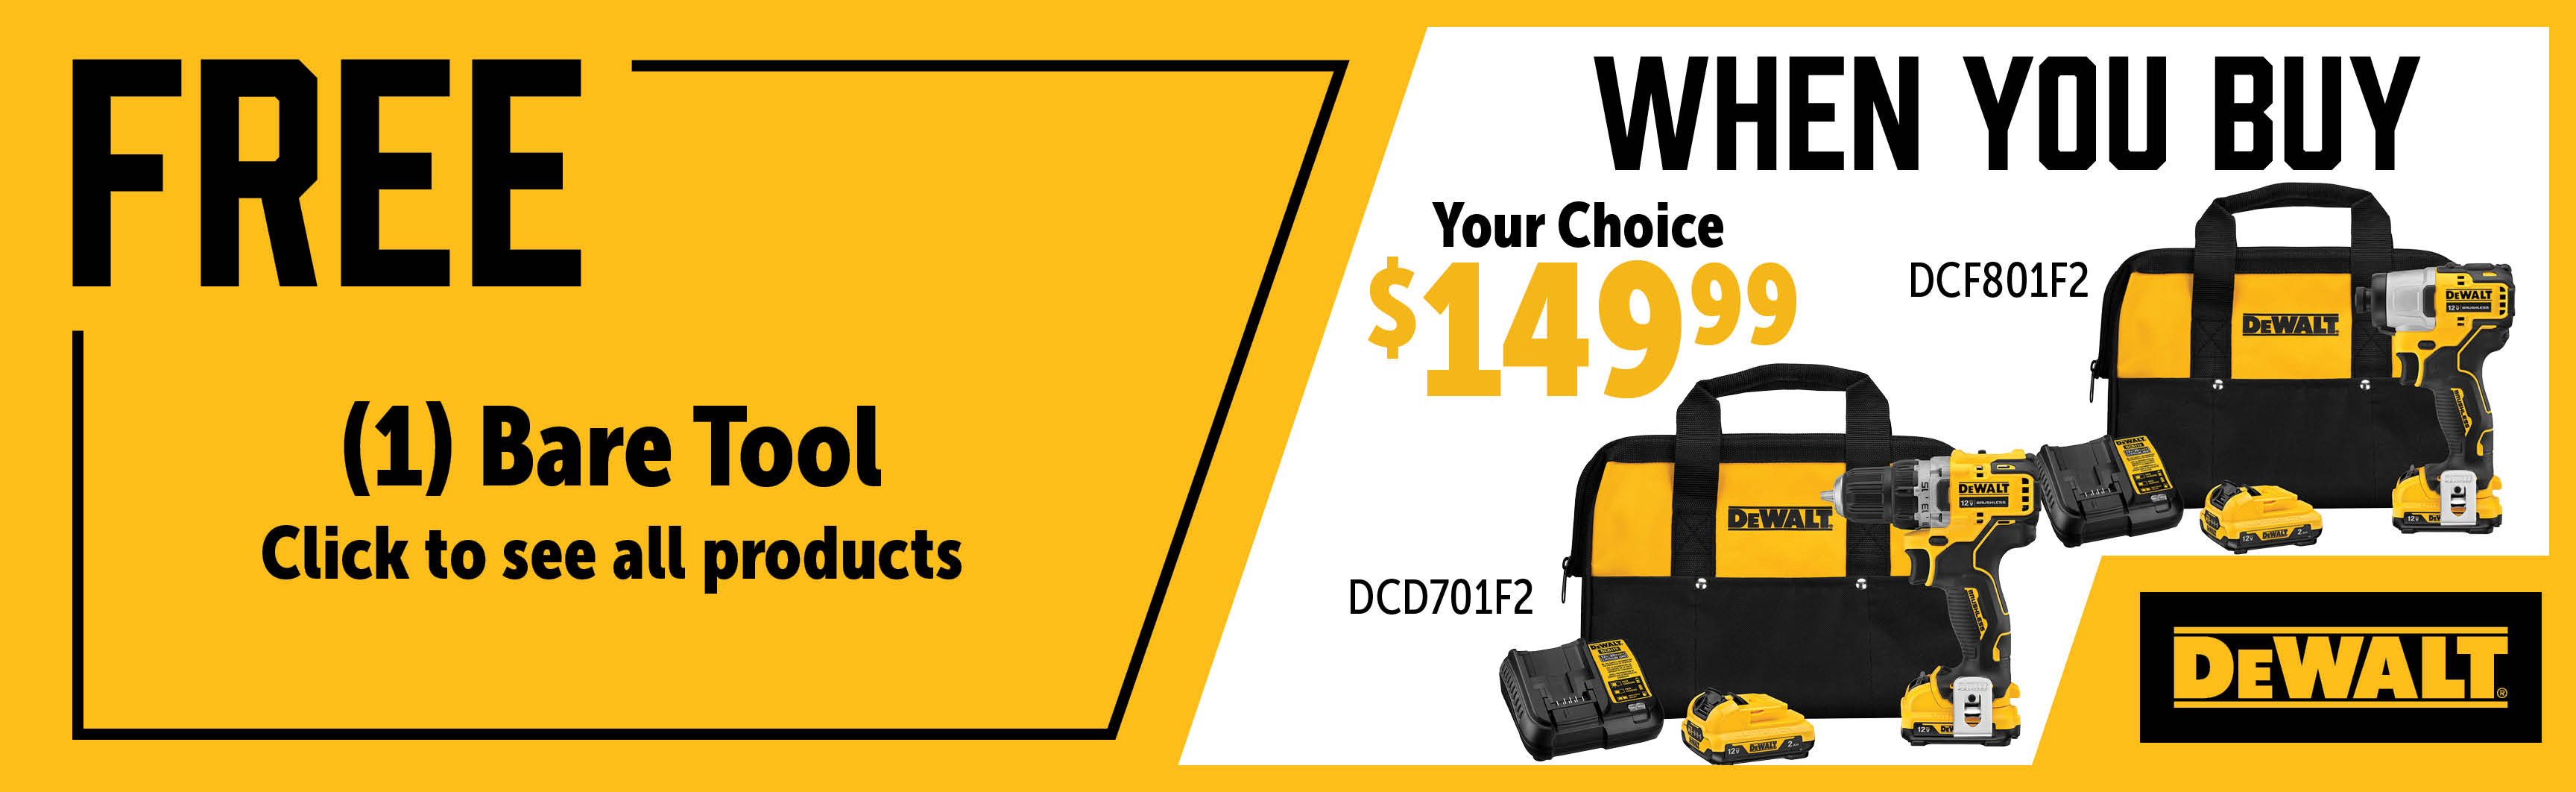 Dewalt April - June: Buy a DCD701F2 or DCF801F2 and get a FREE Qualifying 12V Bare Tool